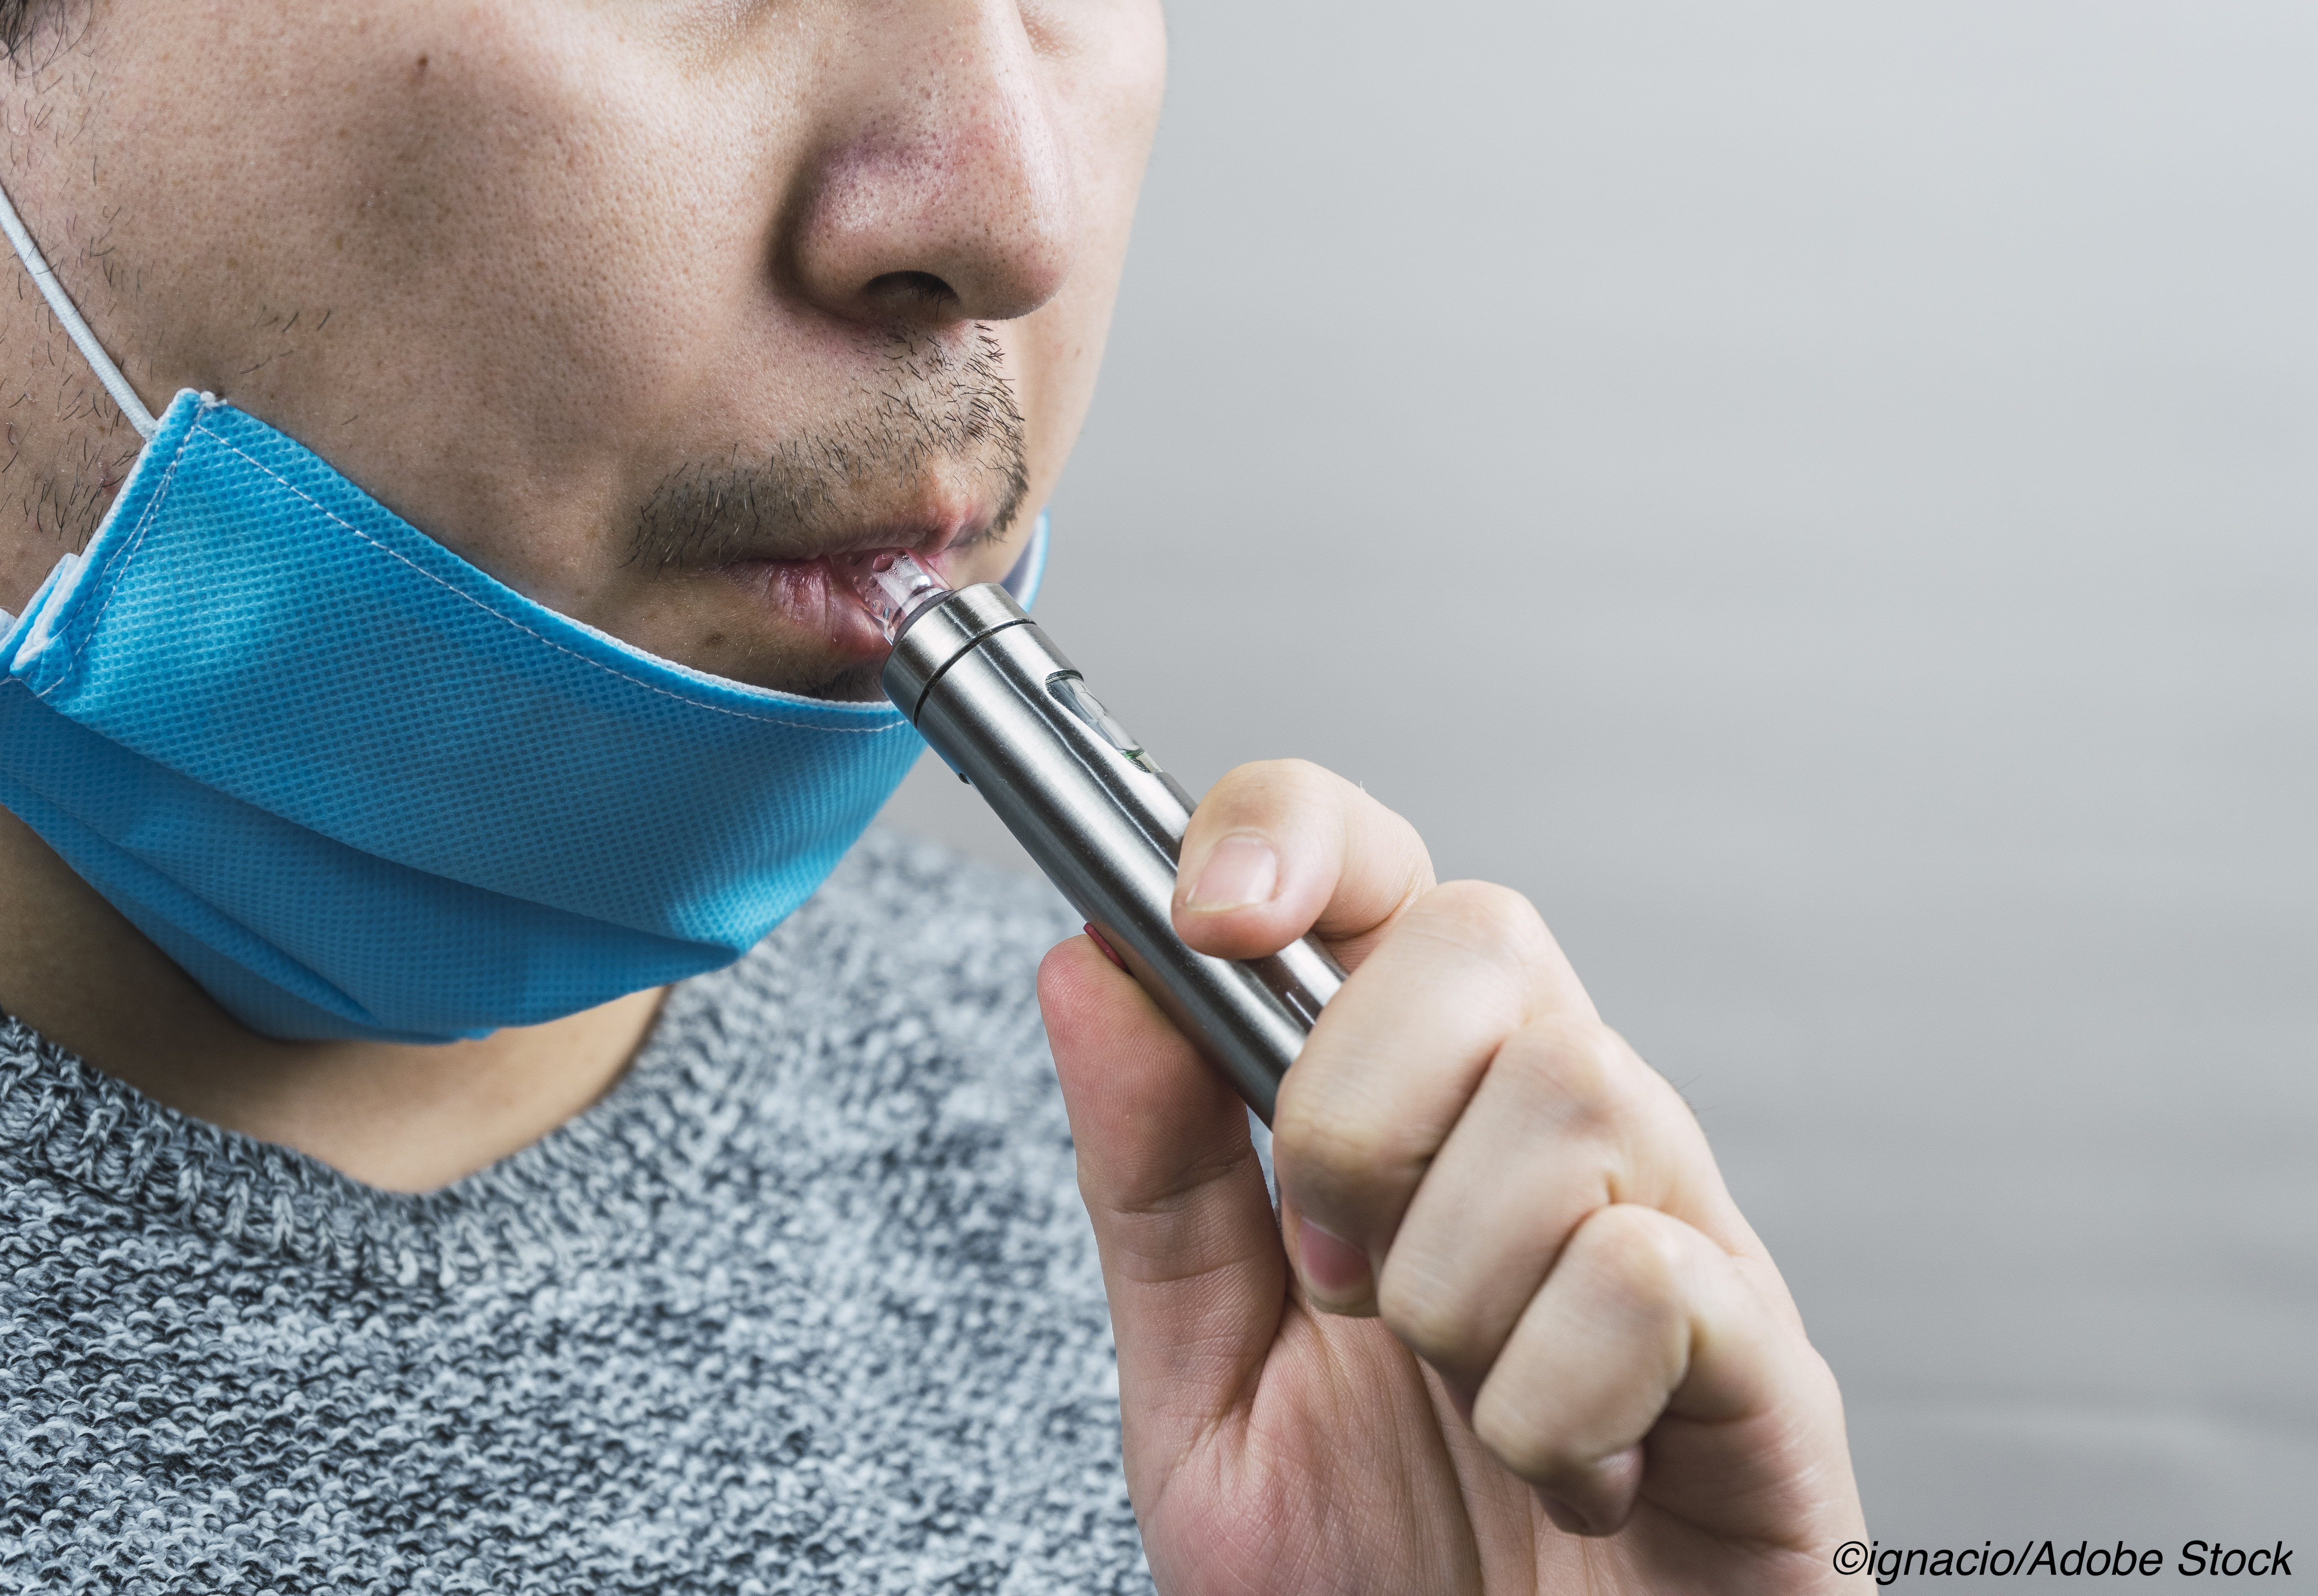 Pandemic Triggers Shifts in e-Cigarette Use